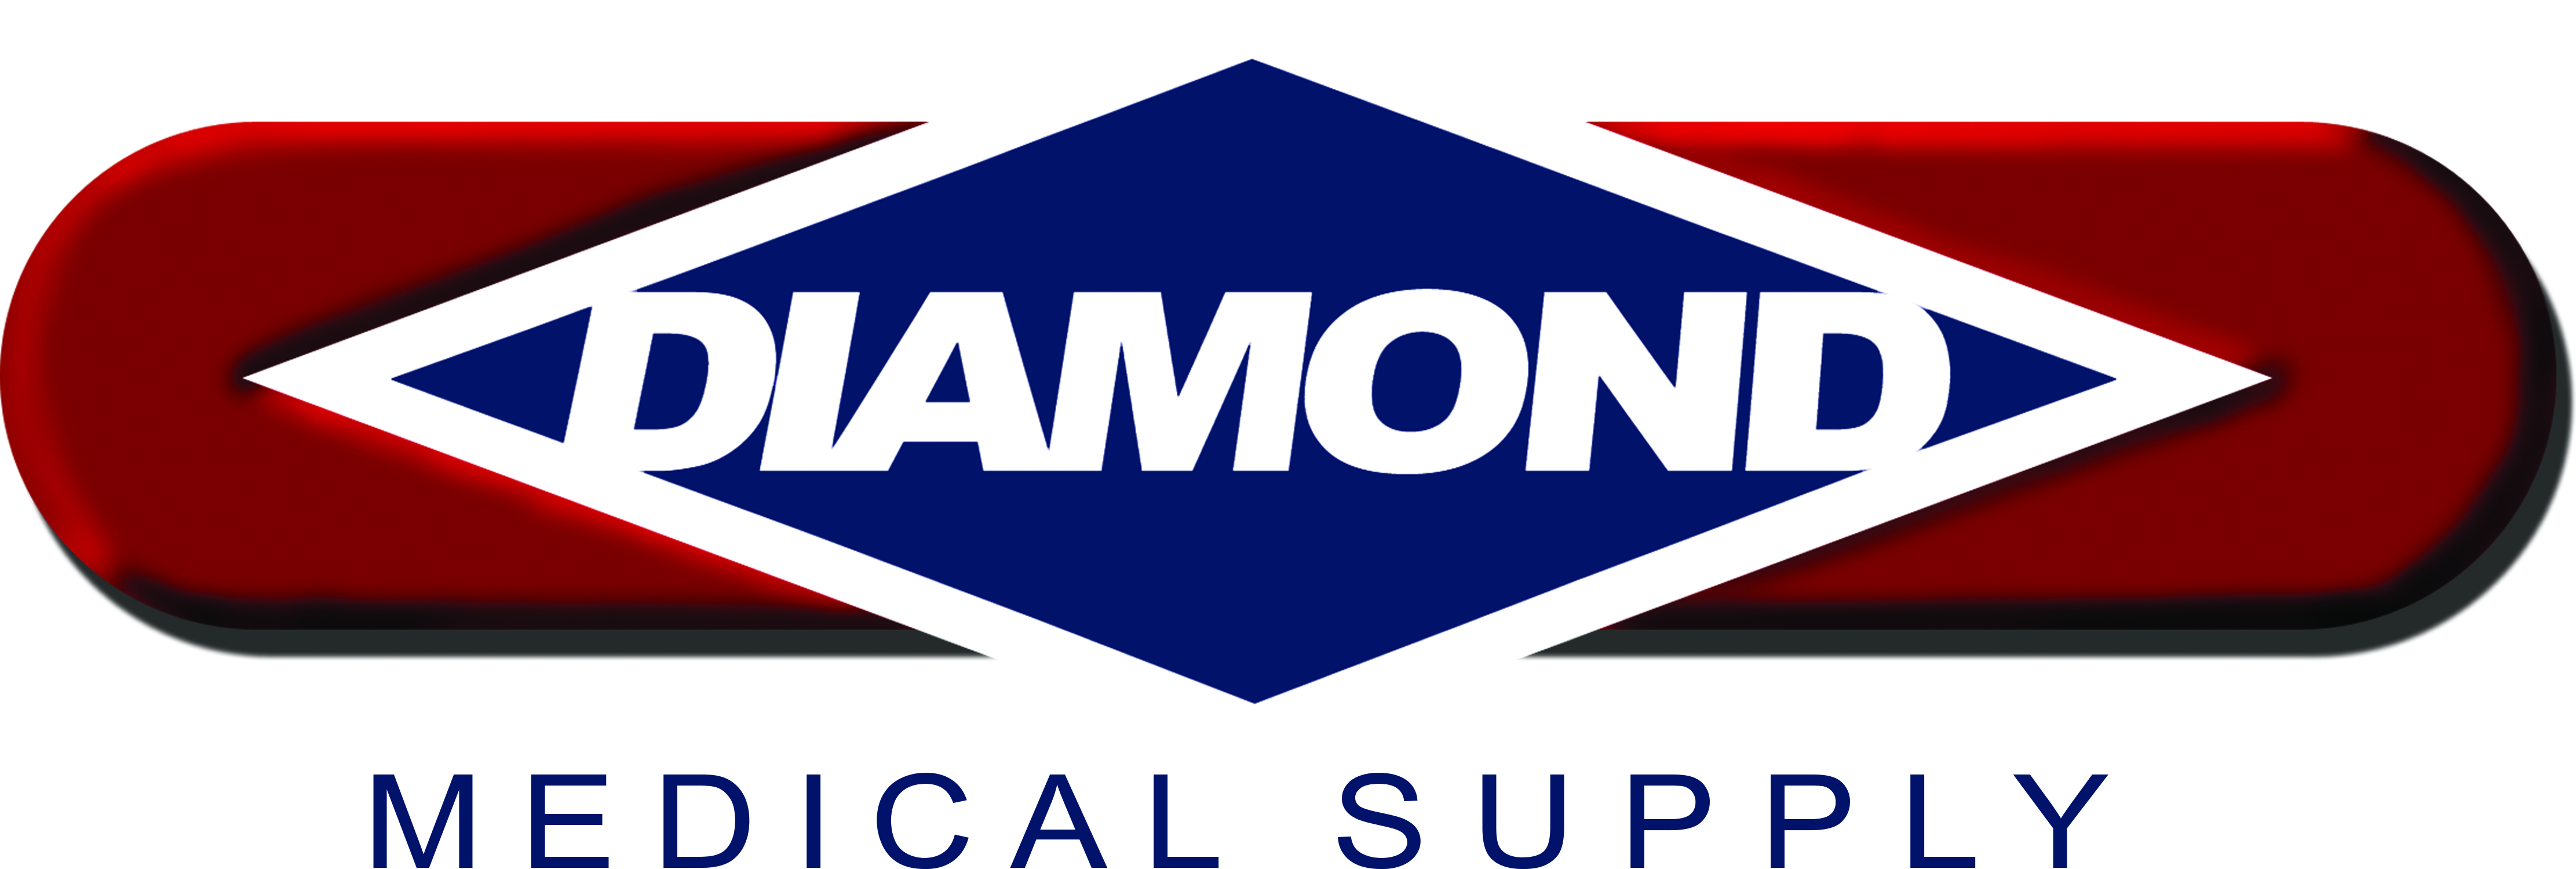 diamond medical supply logo